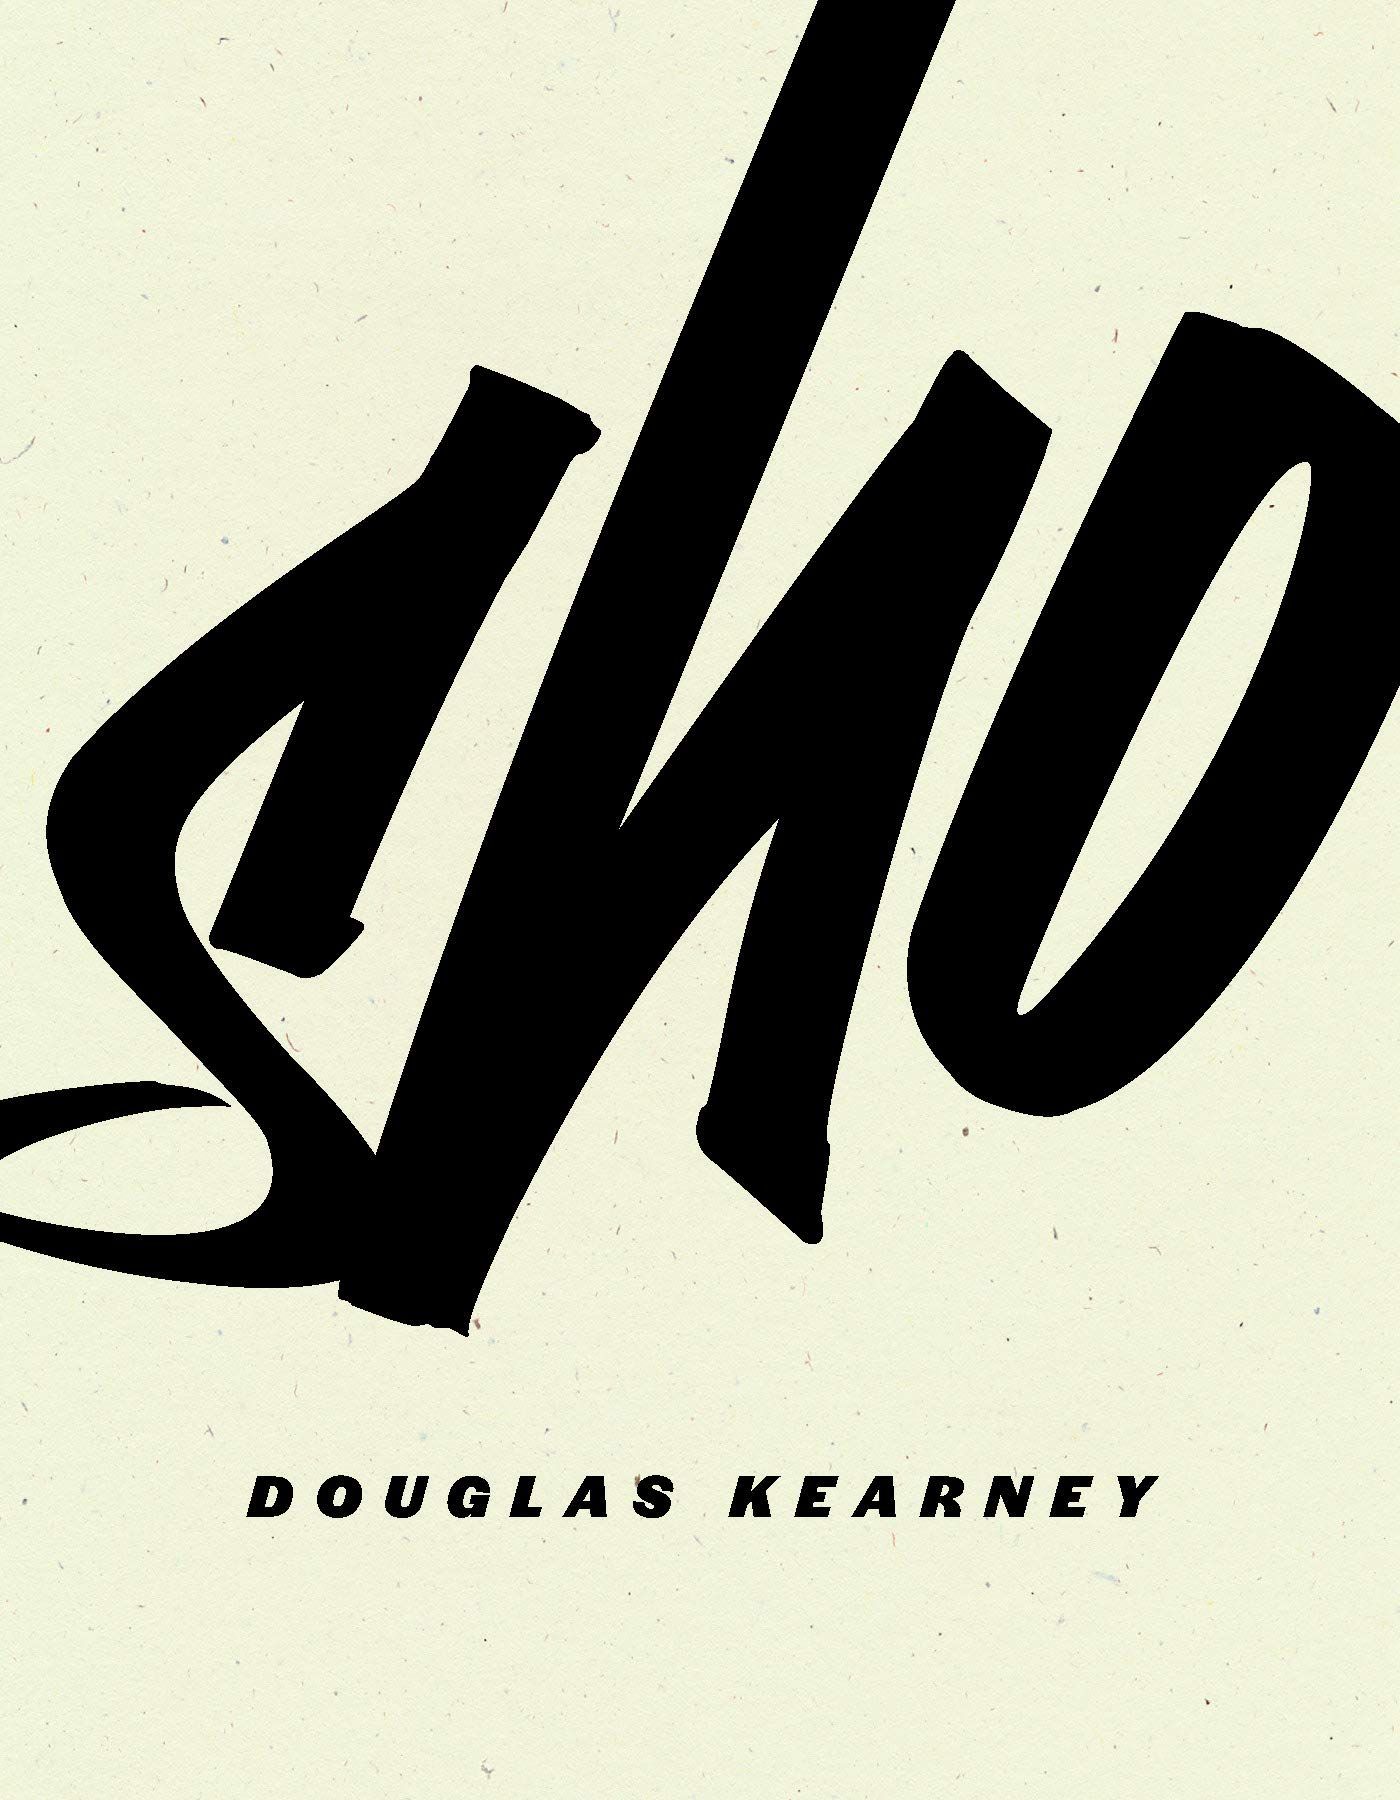 sho by douglas kearney book cover